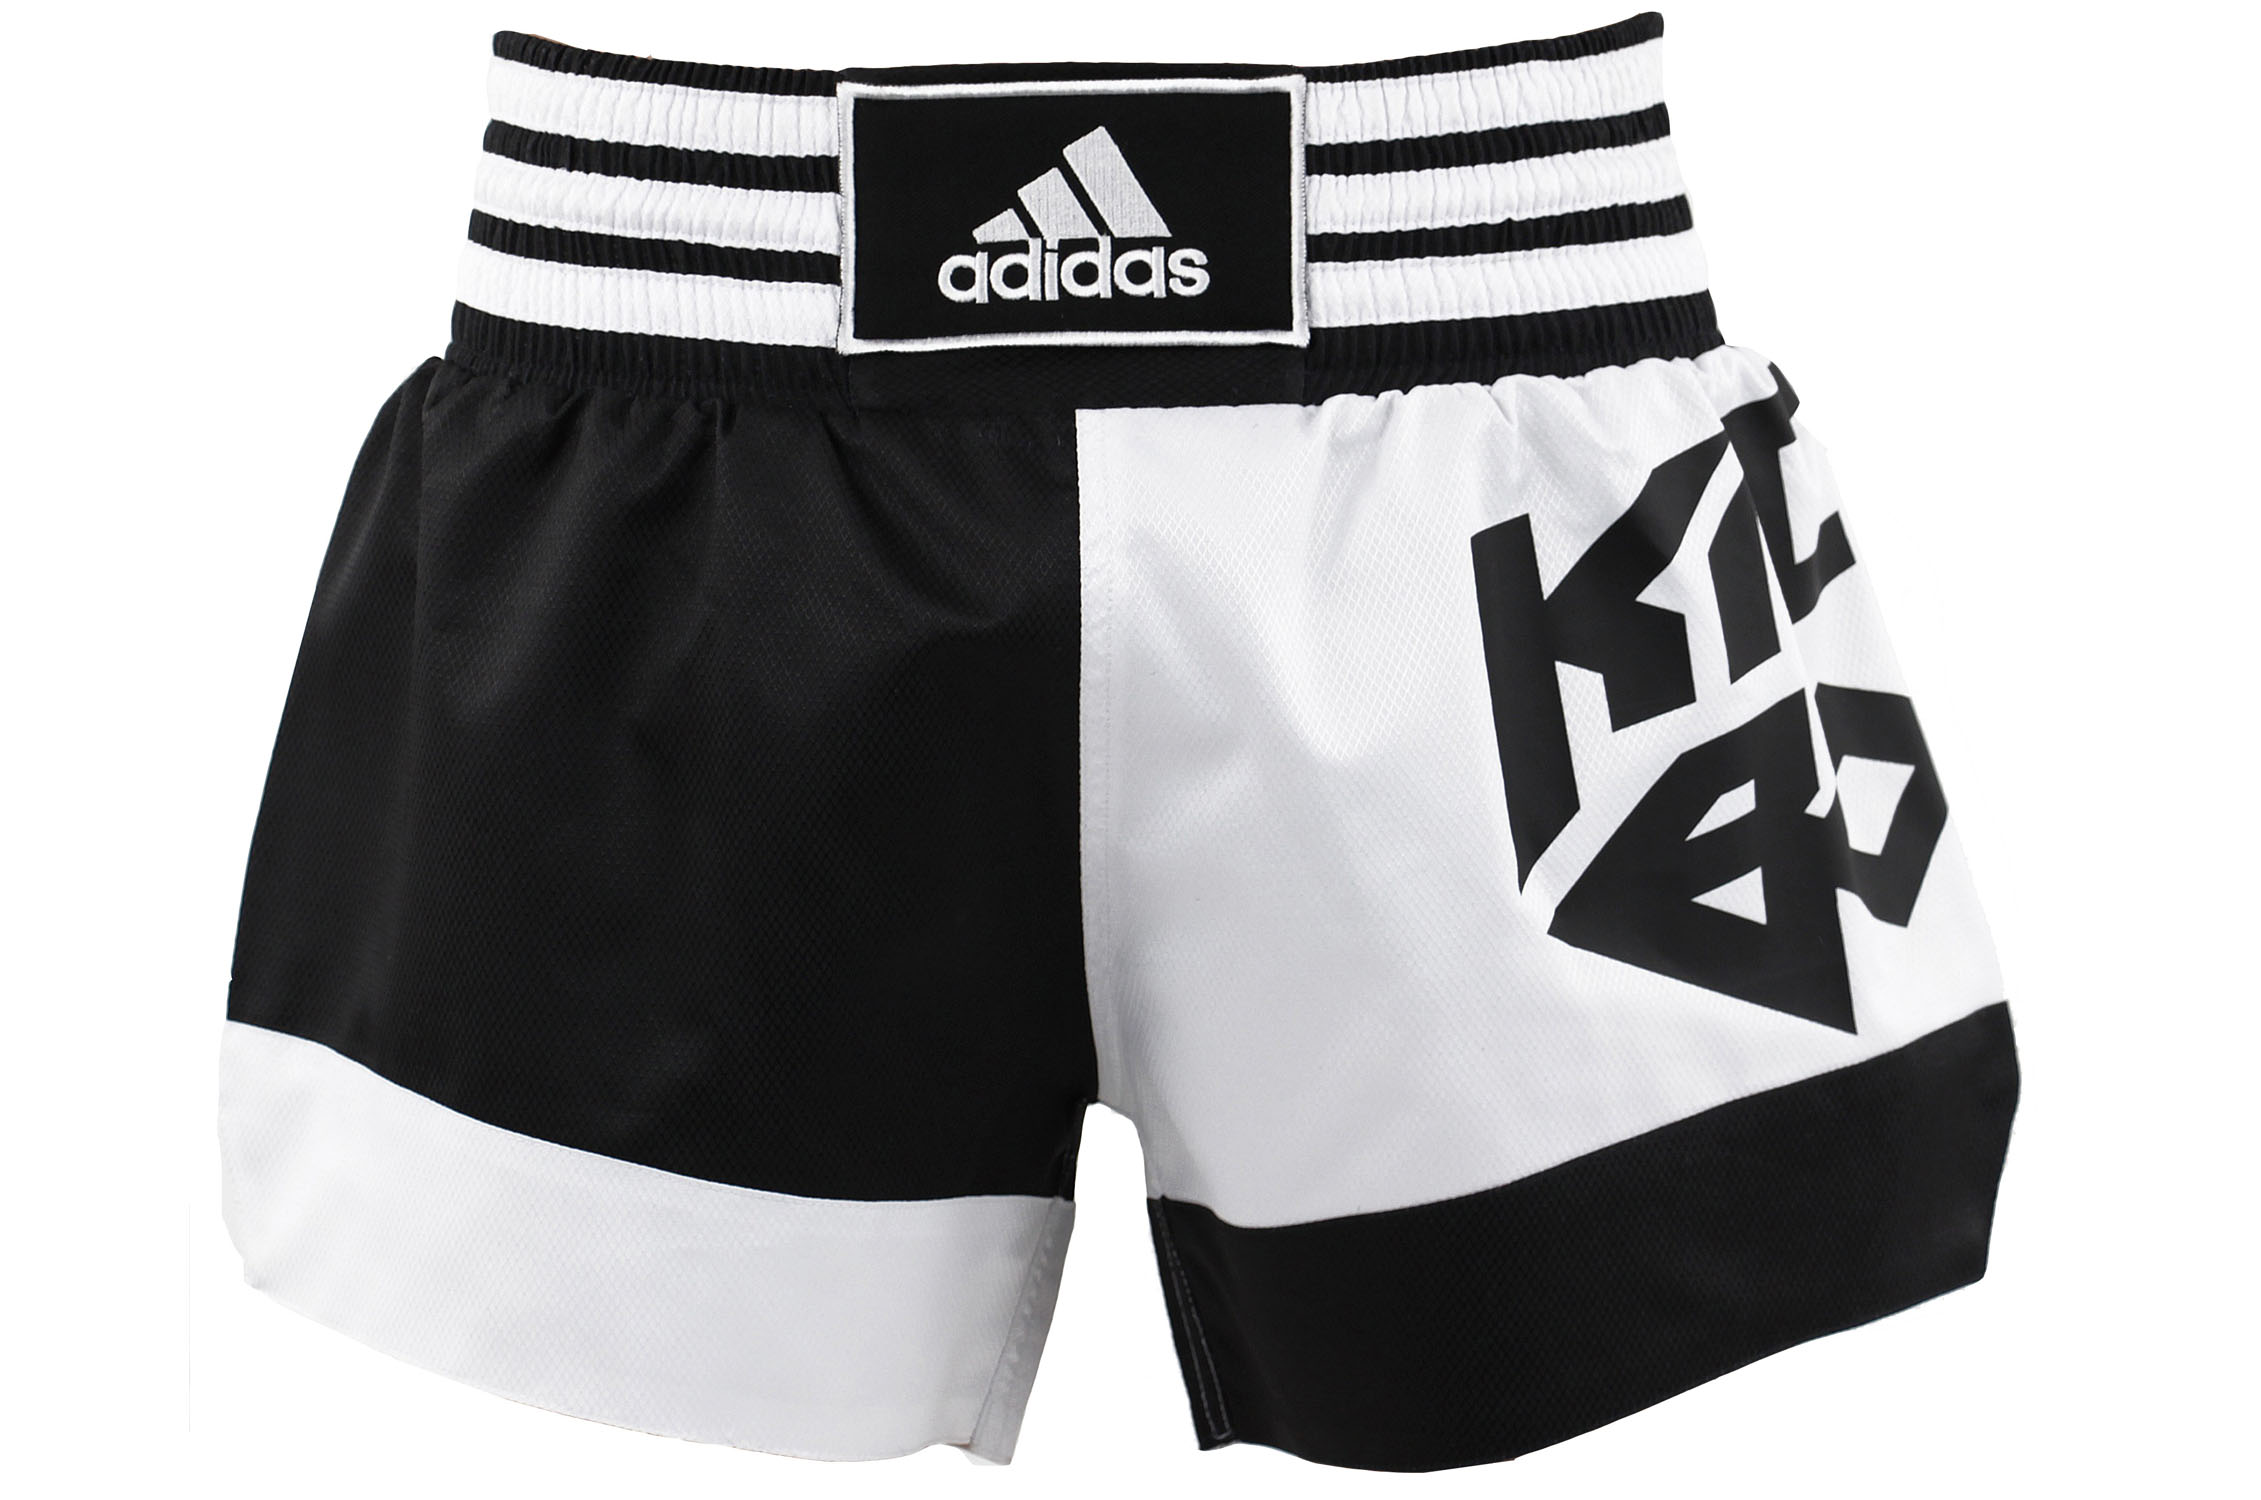 Kick Boxing Shorts, Adidas ADISKB02 - S - DragonSports.eu